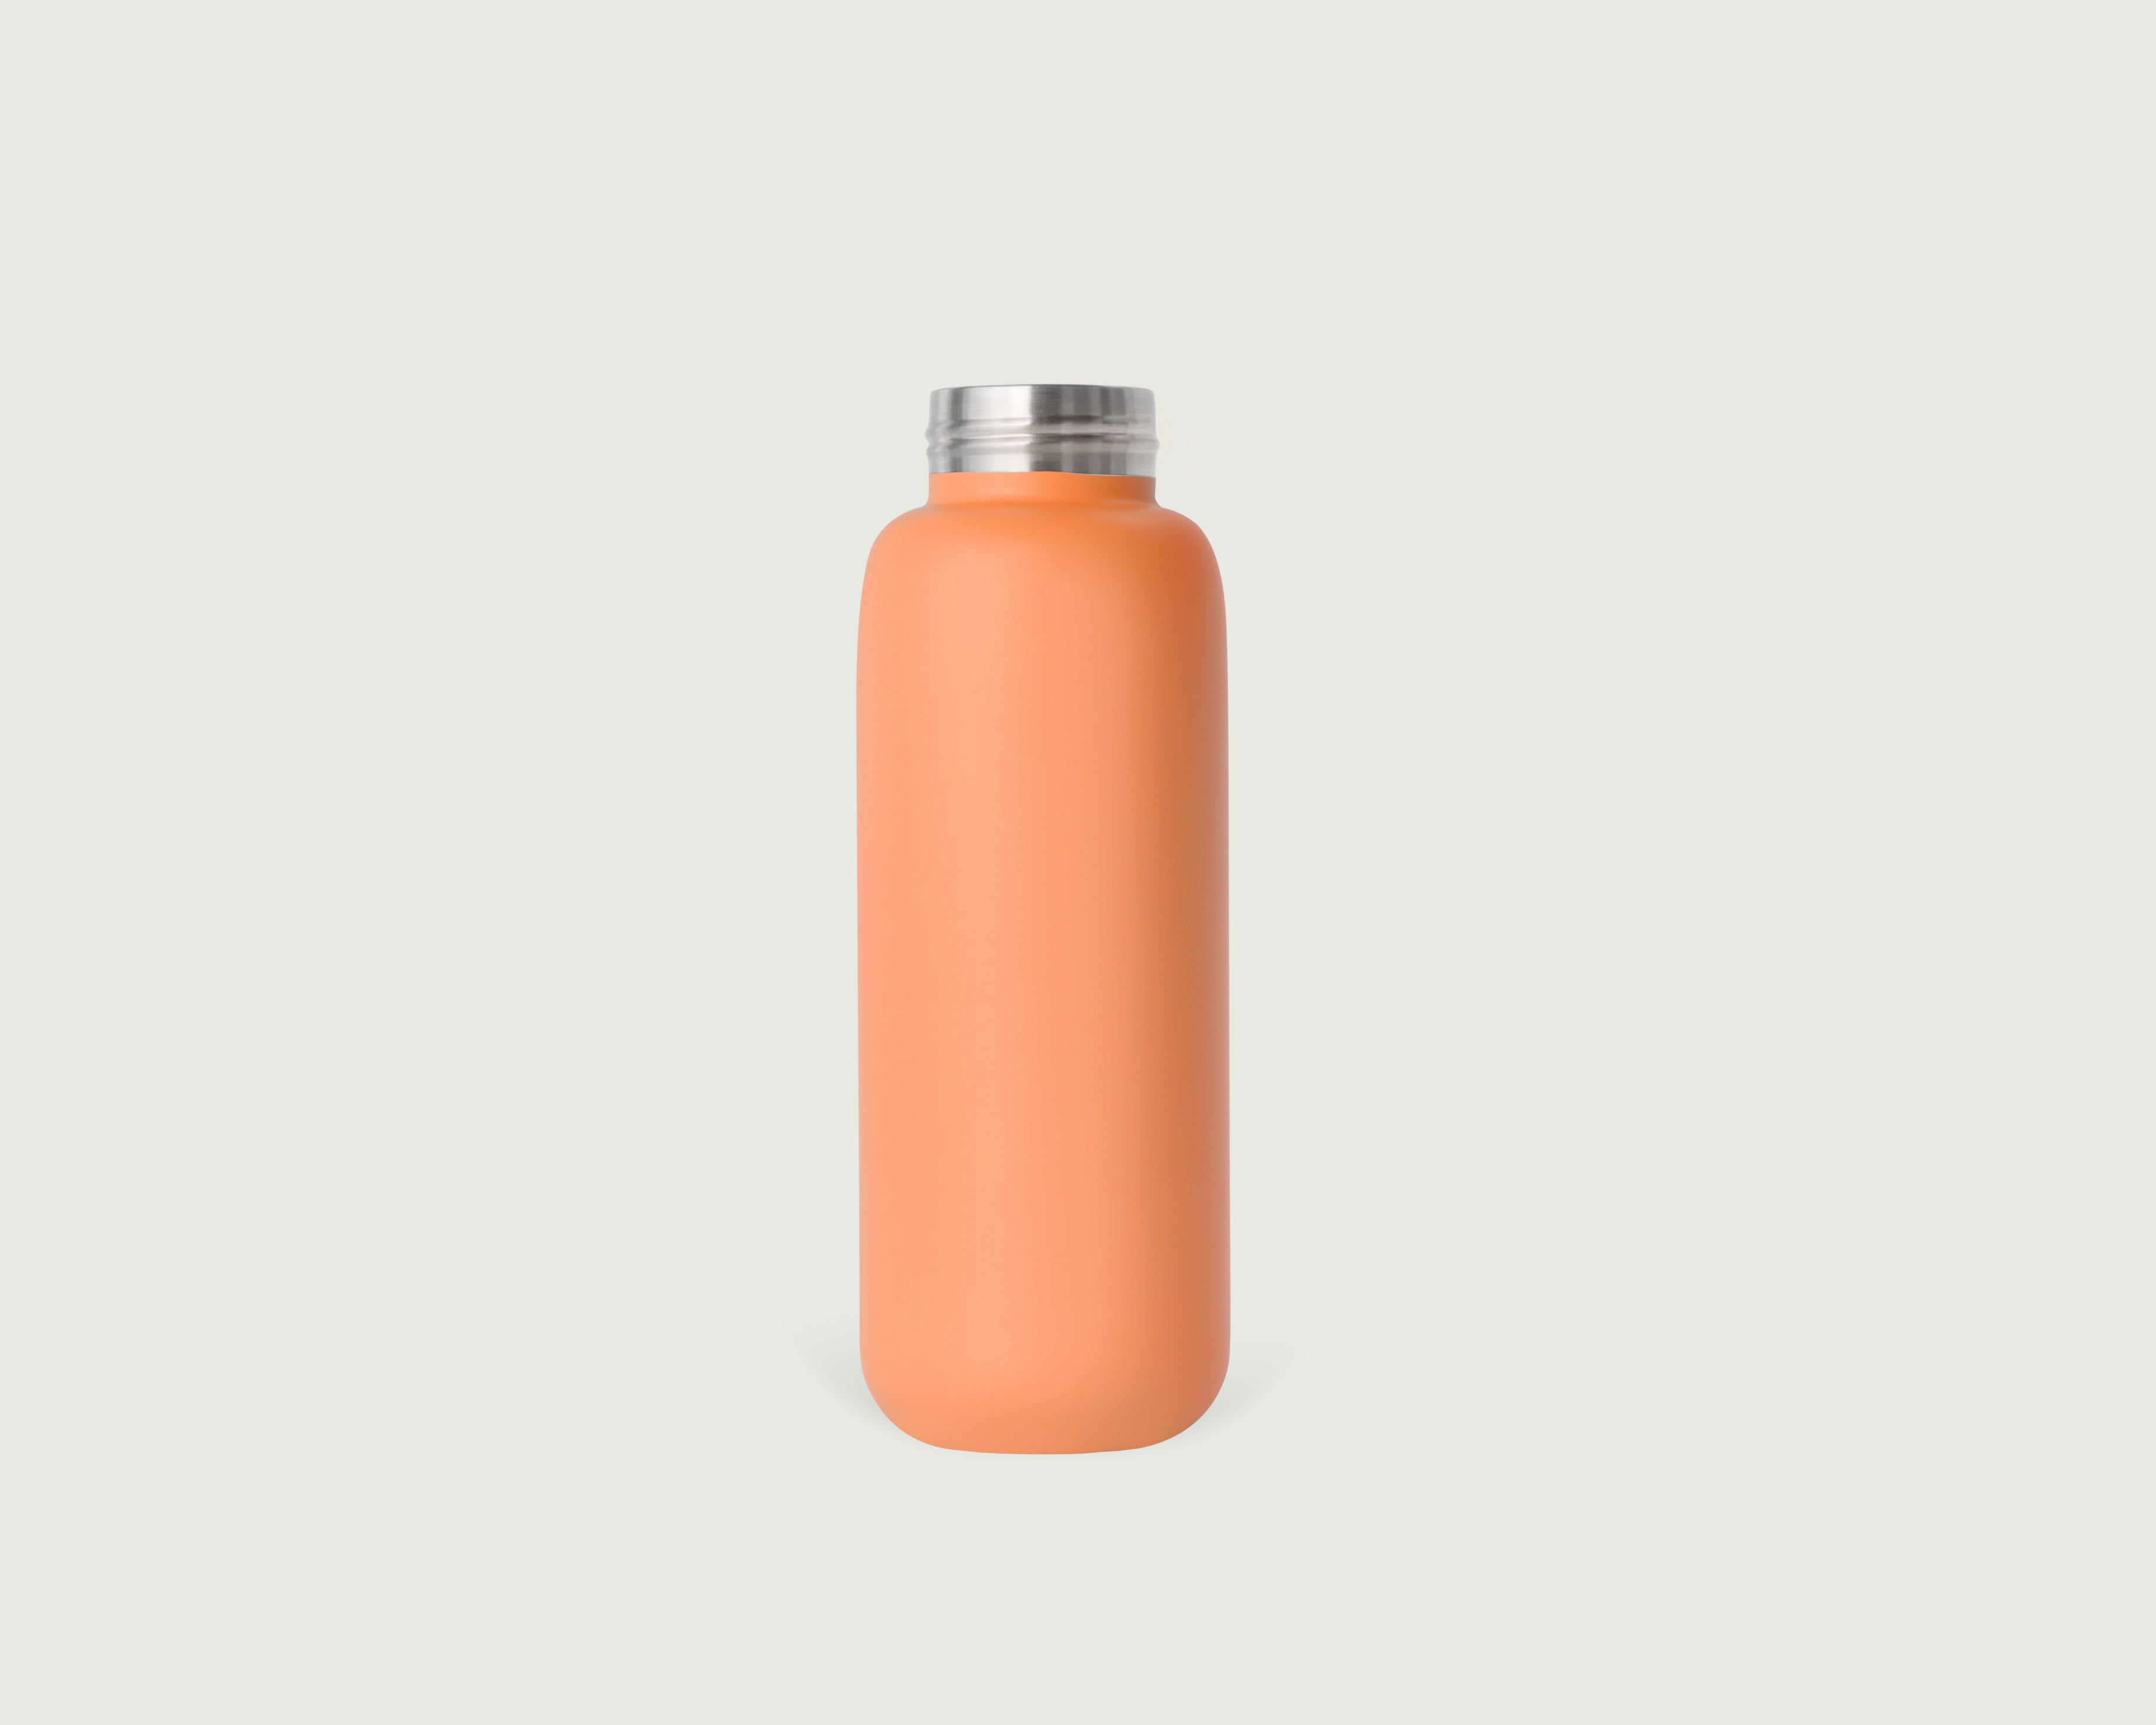 Creamsicle::Flask tumbler bottle orange front